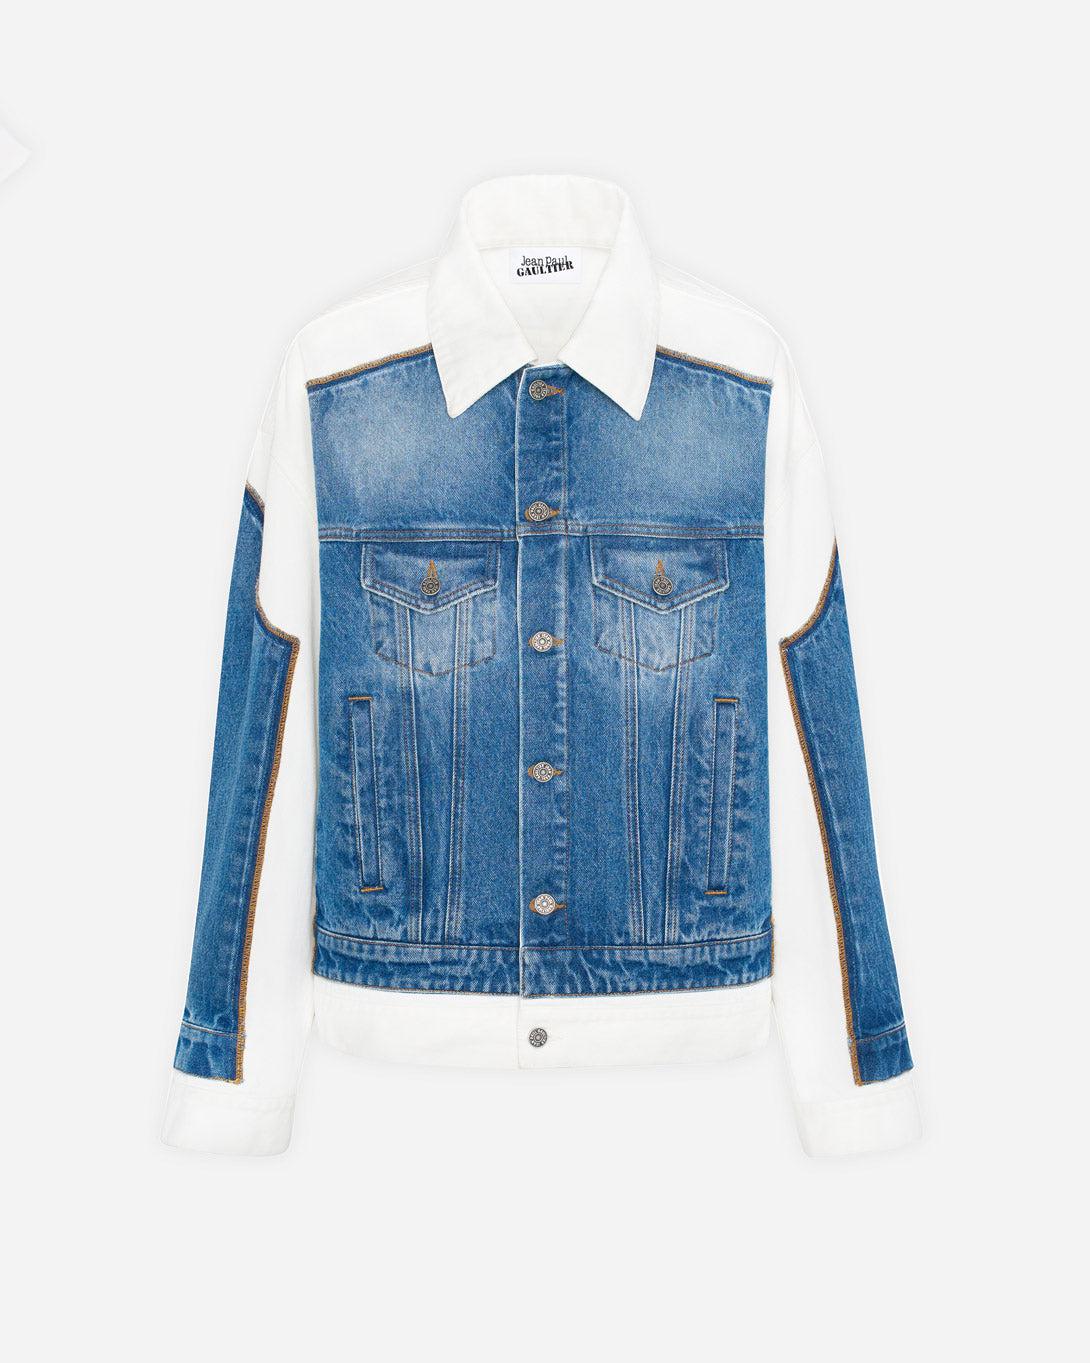 Denim Jacket With Contrasted Denim Details - Coats & Jackets - Jean Paul Gaultier - Elevastor